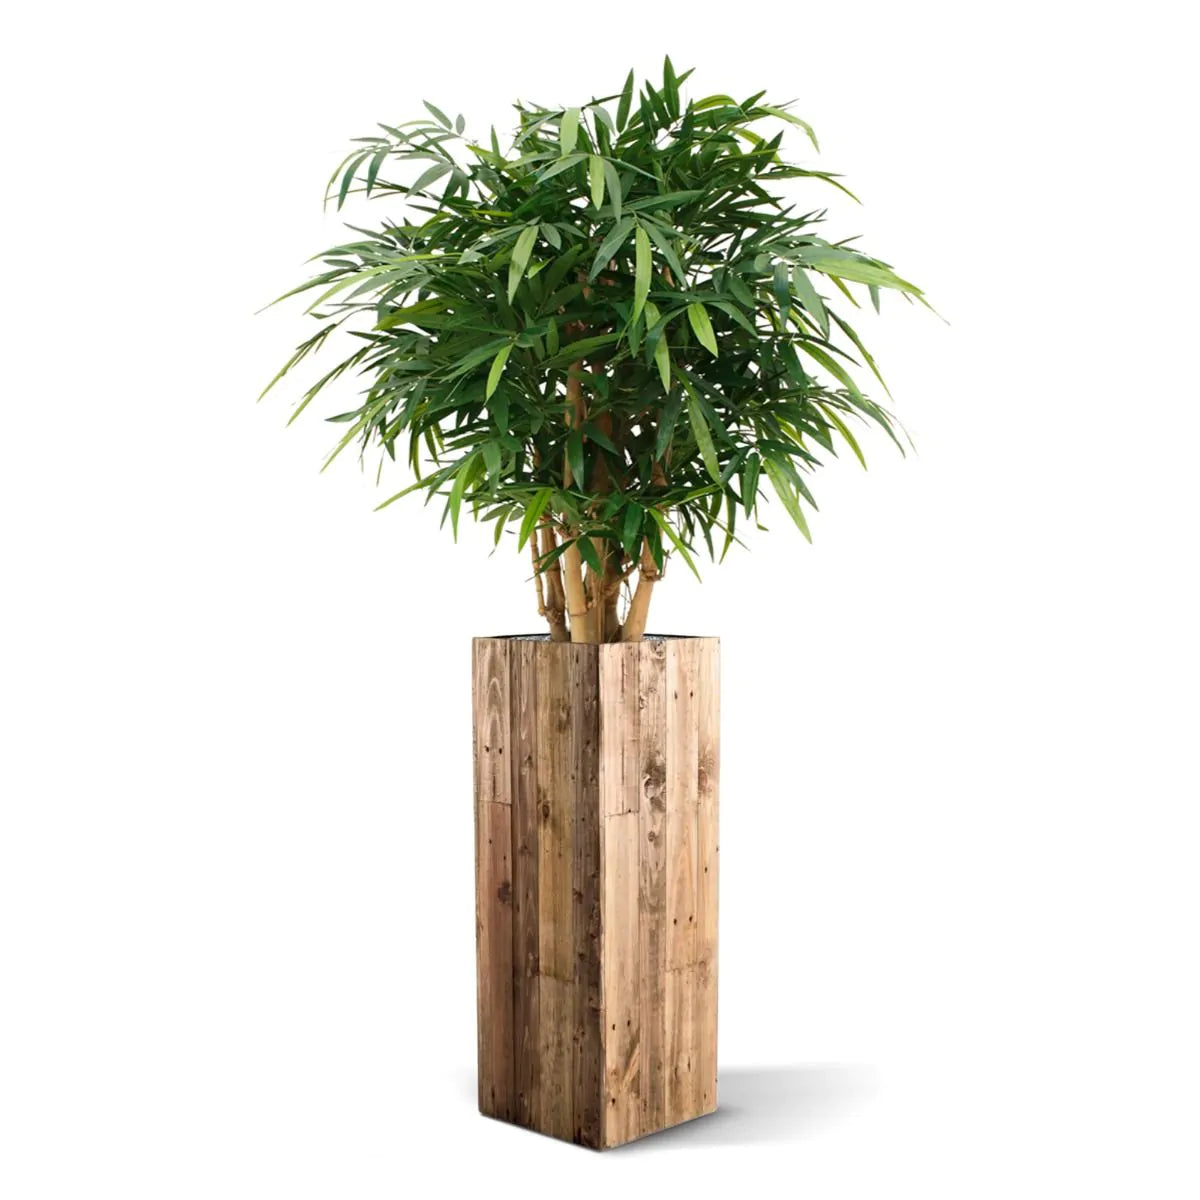 Pflanzenglanz® Buddha Bambus Kunstpflanze Deluxe 125 cm Kunstbaum